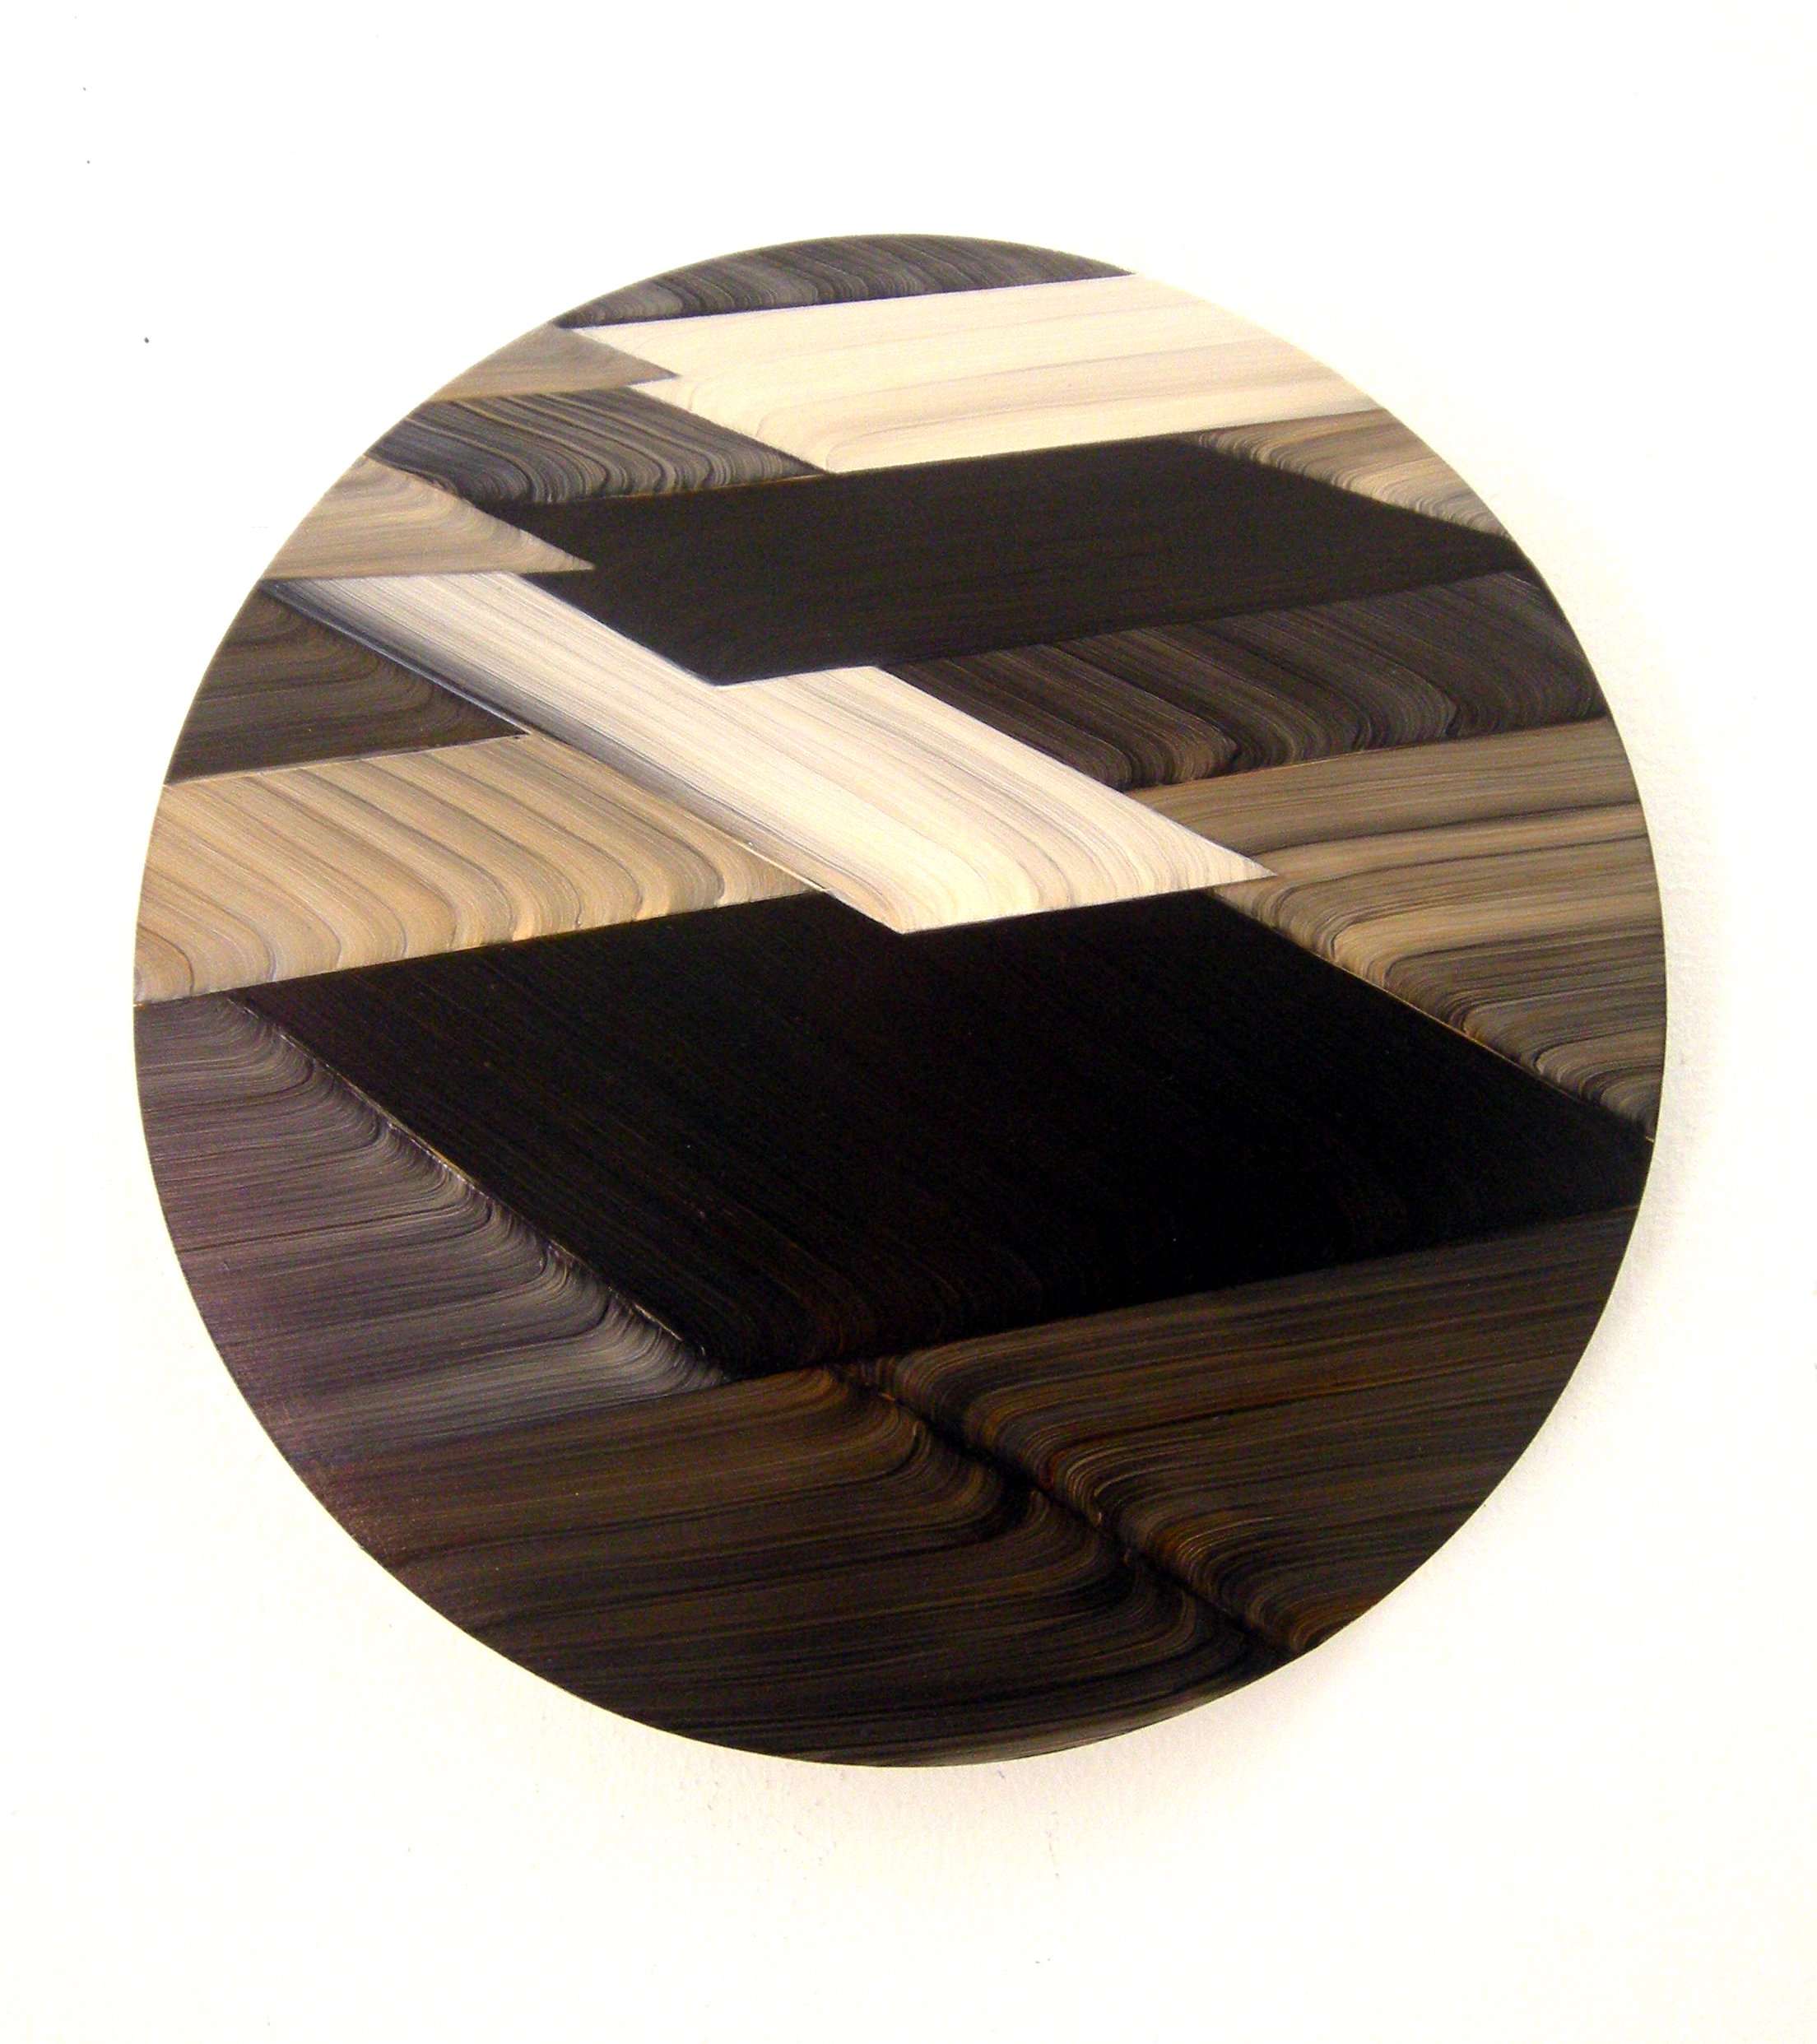 M. B. O'Toole, Untitled 2, oil on board, 30cm diameter, 2011.